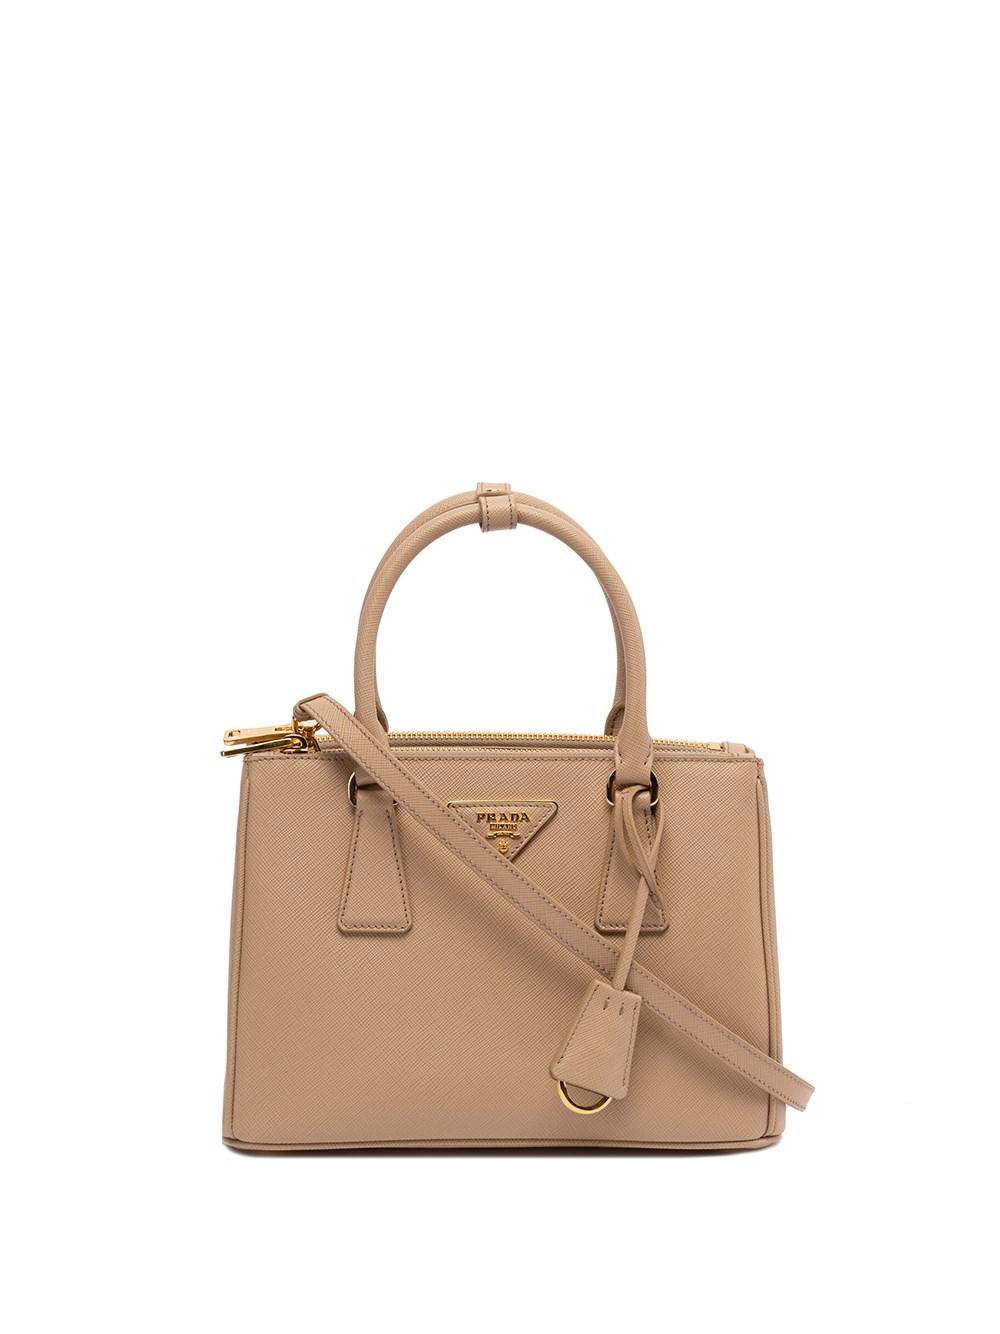 Prada Small ` Galleria` Saffiano Leather Handbag in Natural | Lyst